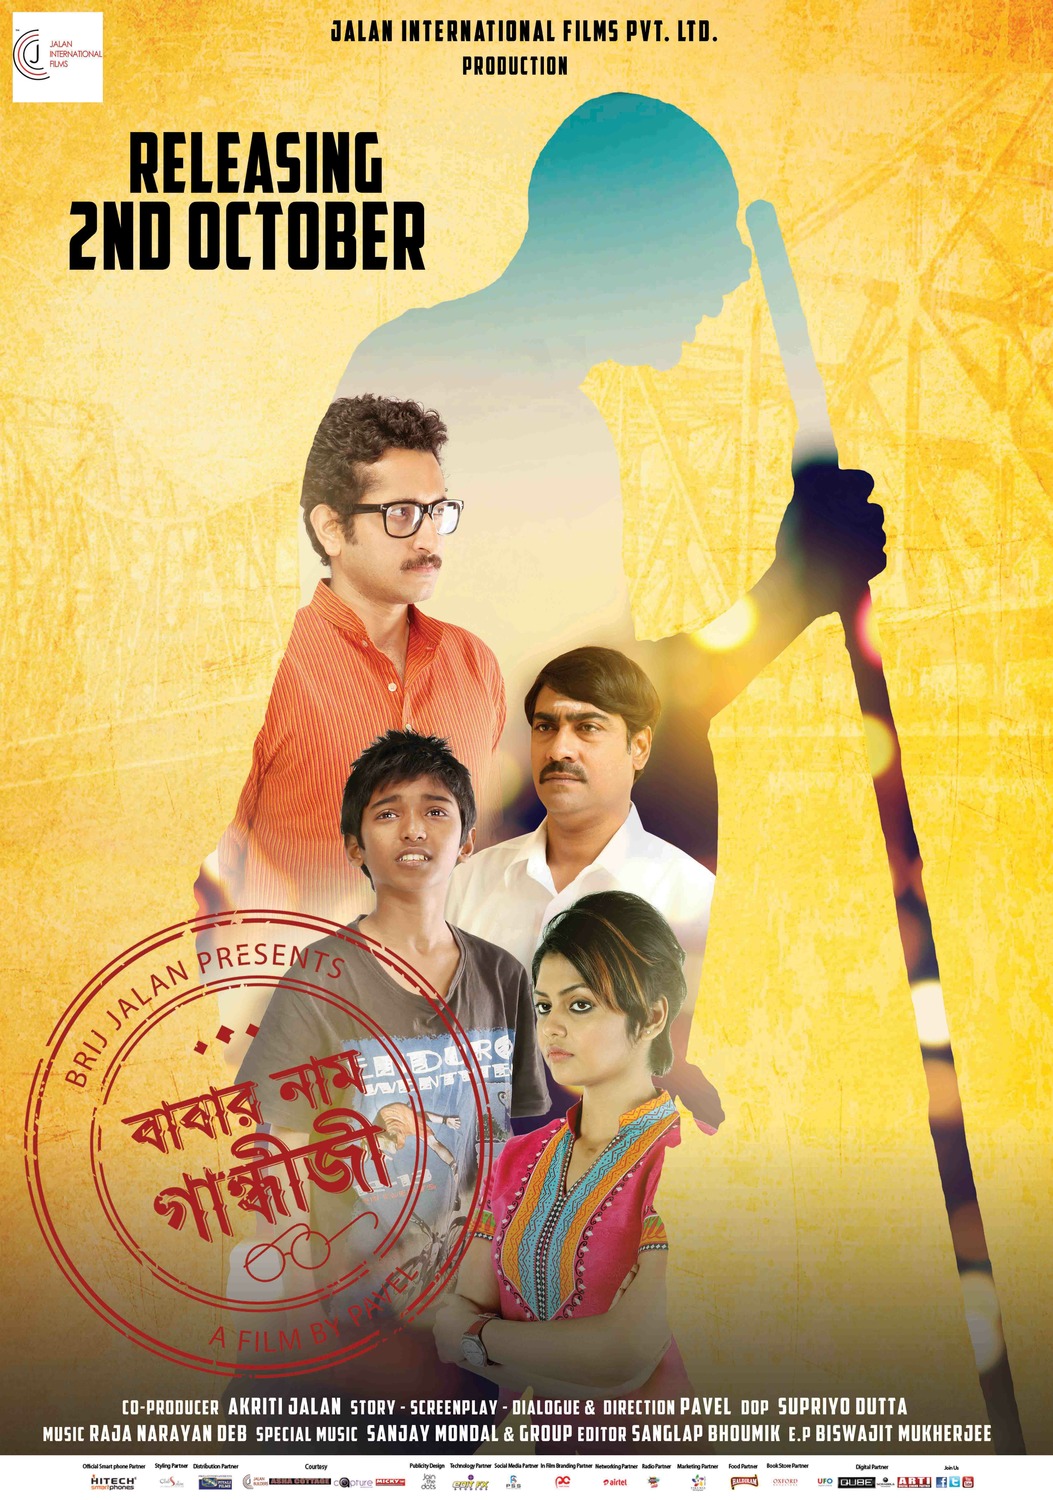 Extra Large Movie Poster Image for Babar Naam Gandhiji (#2 of 5)